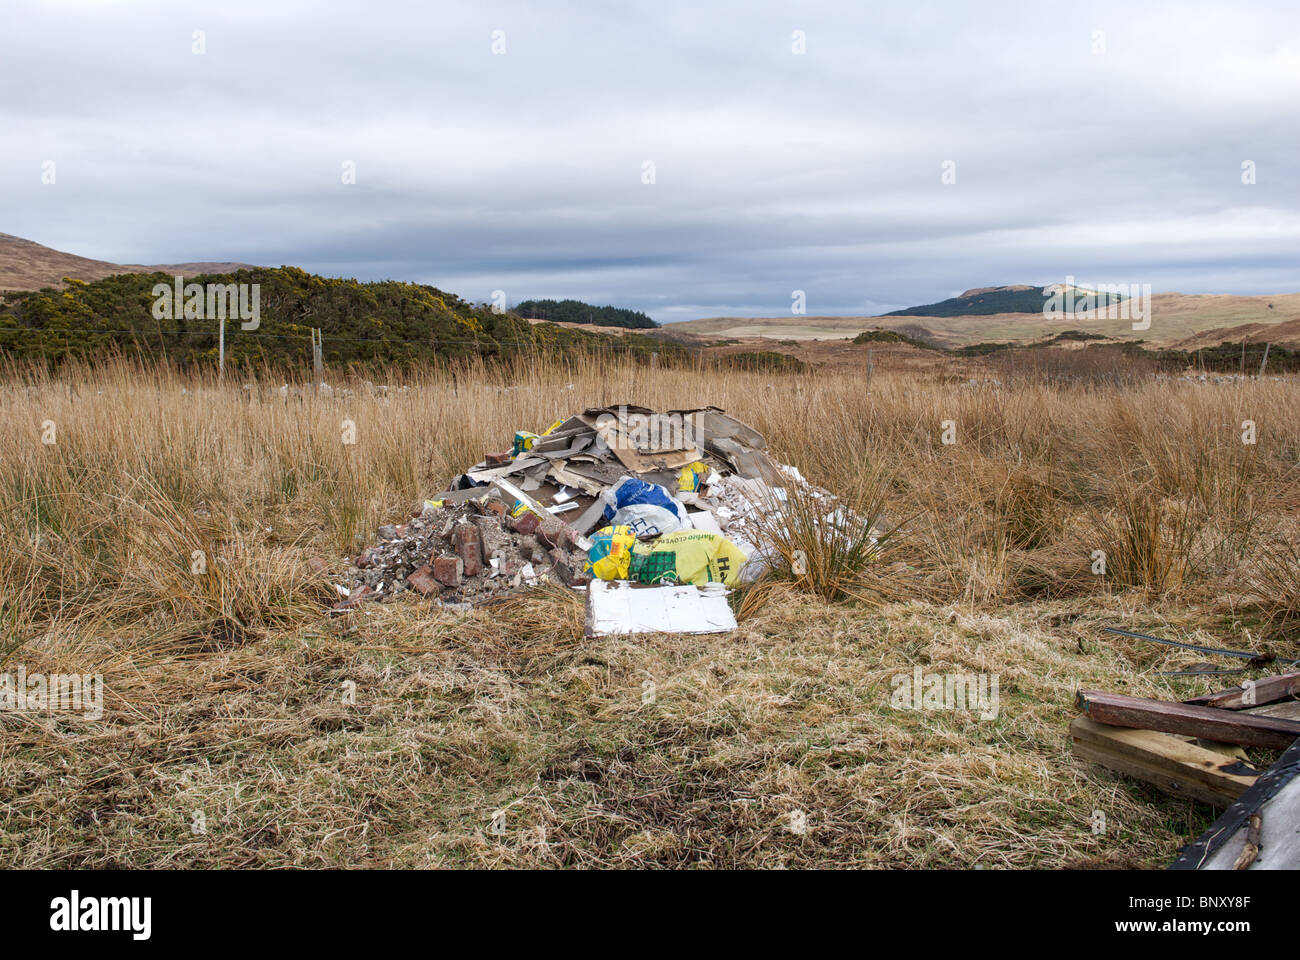 Amontonaron residuos vertidos en la tierras de labrantío, Kilchoan, Ardnamurchan, Scotland, Reino Unido Foto de stock